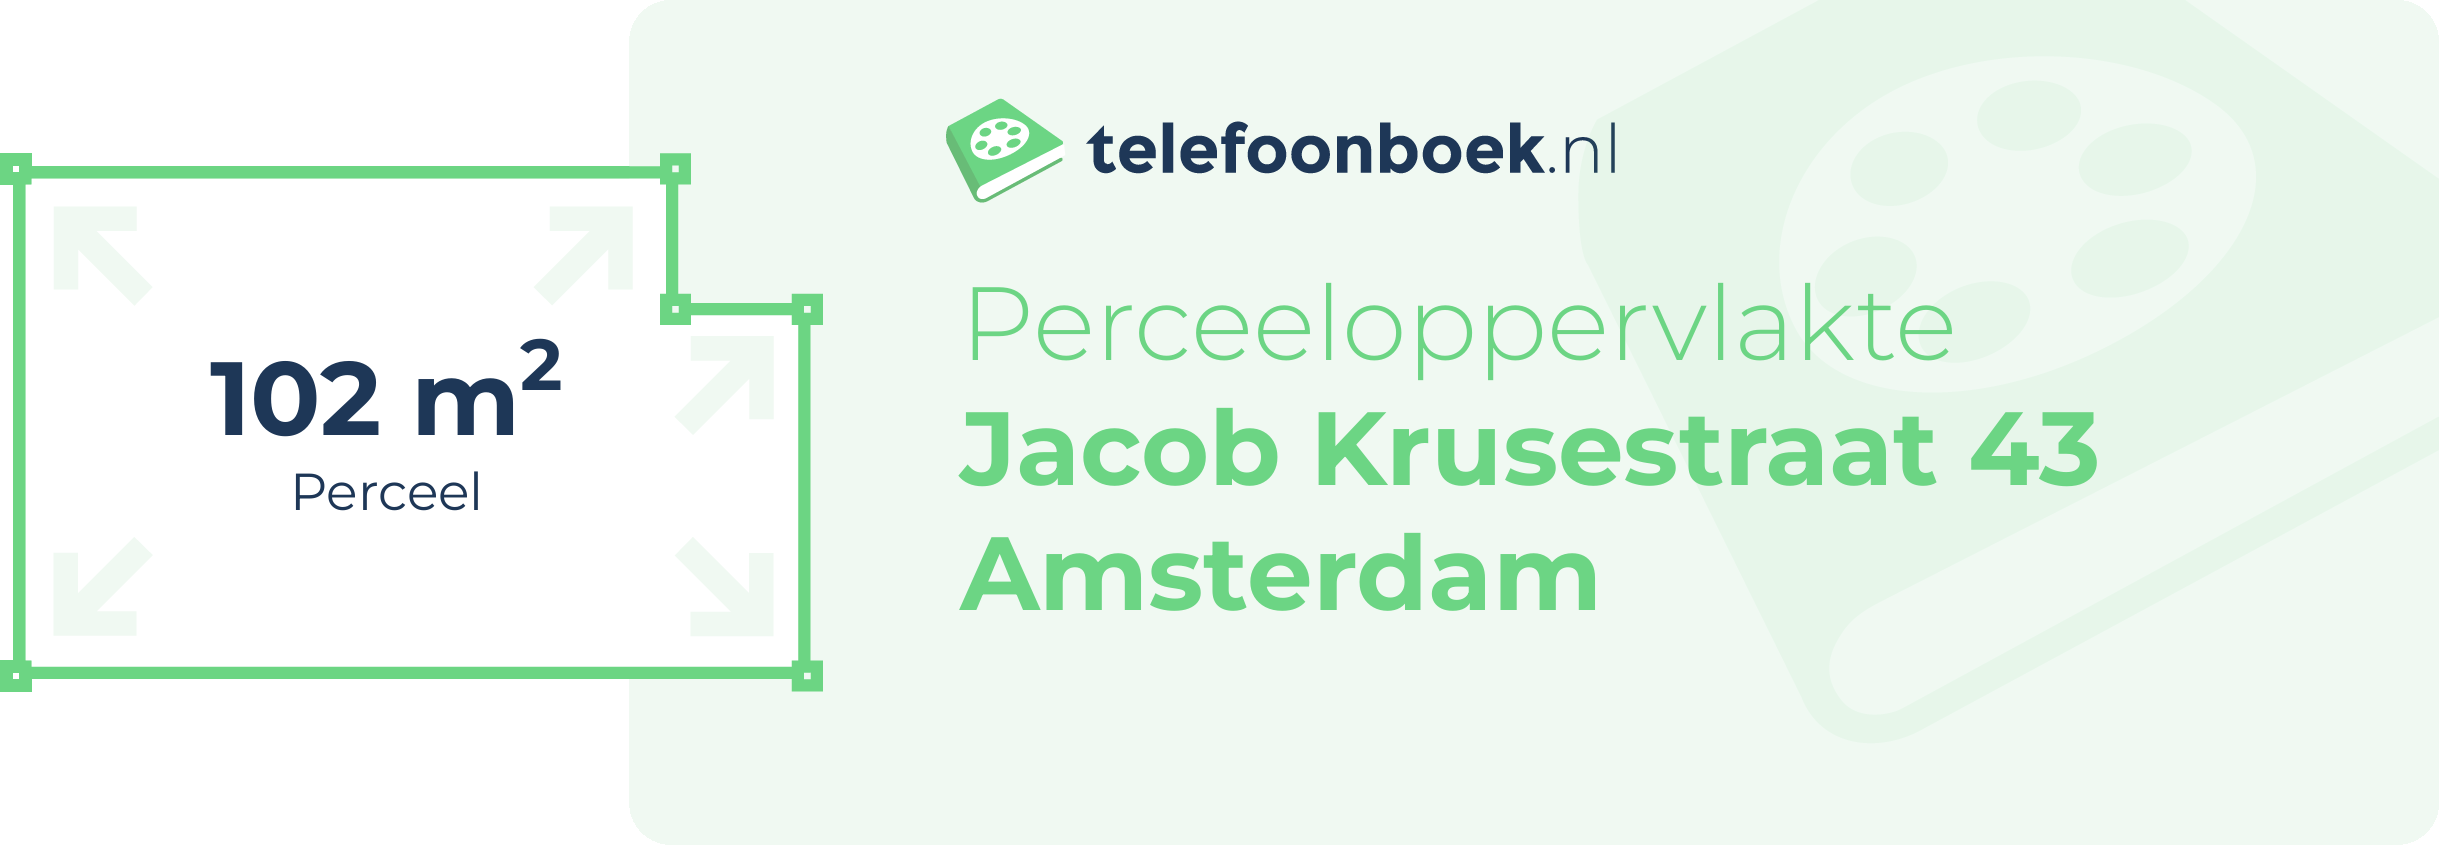 Perceeloppervlakte Jacob Krusestraat 43 Amsterdam